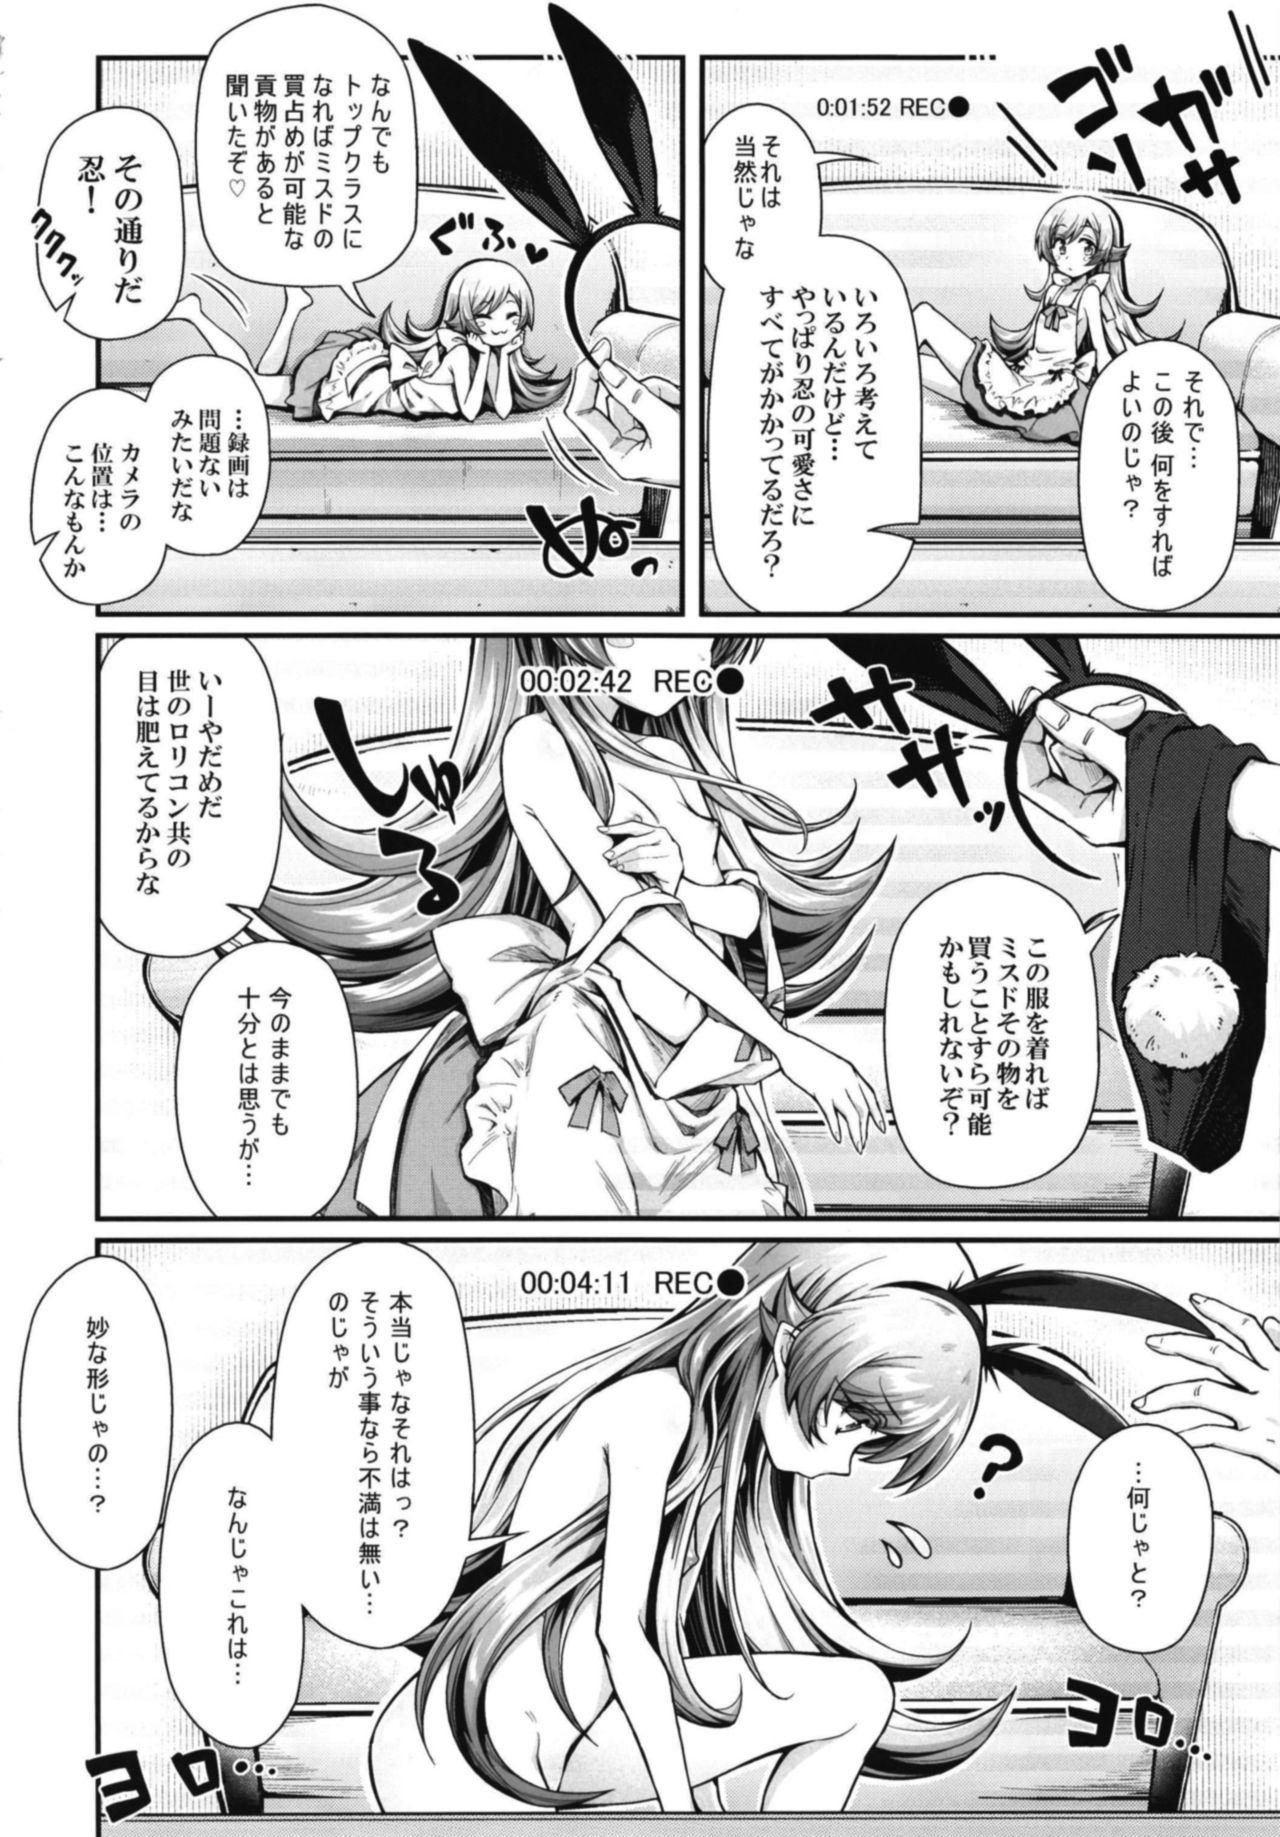 Pretty Pachimonogatari Part 16: Shinobu Debut - Bakemonogatari Mulata - Page 4